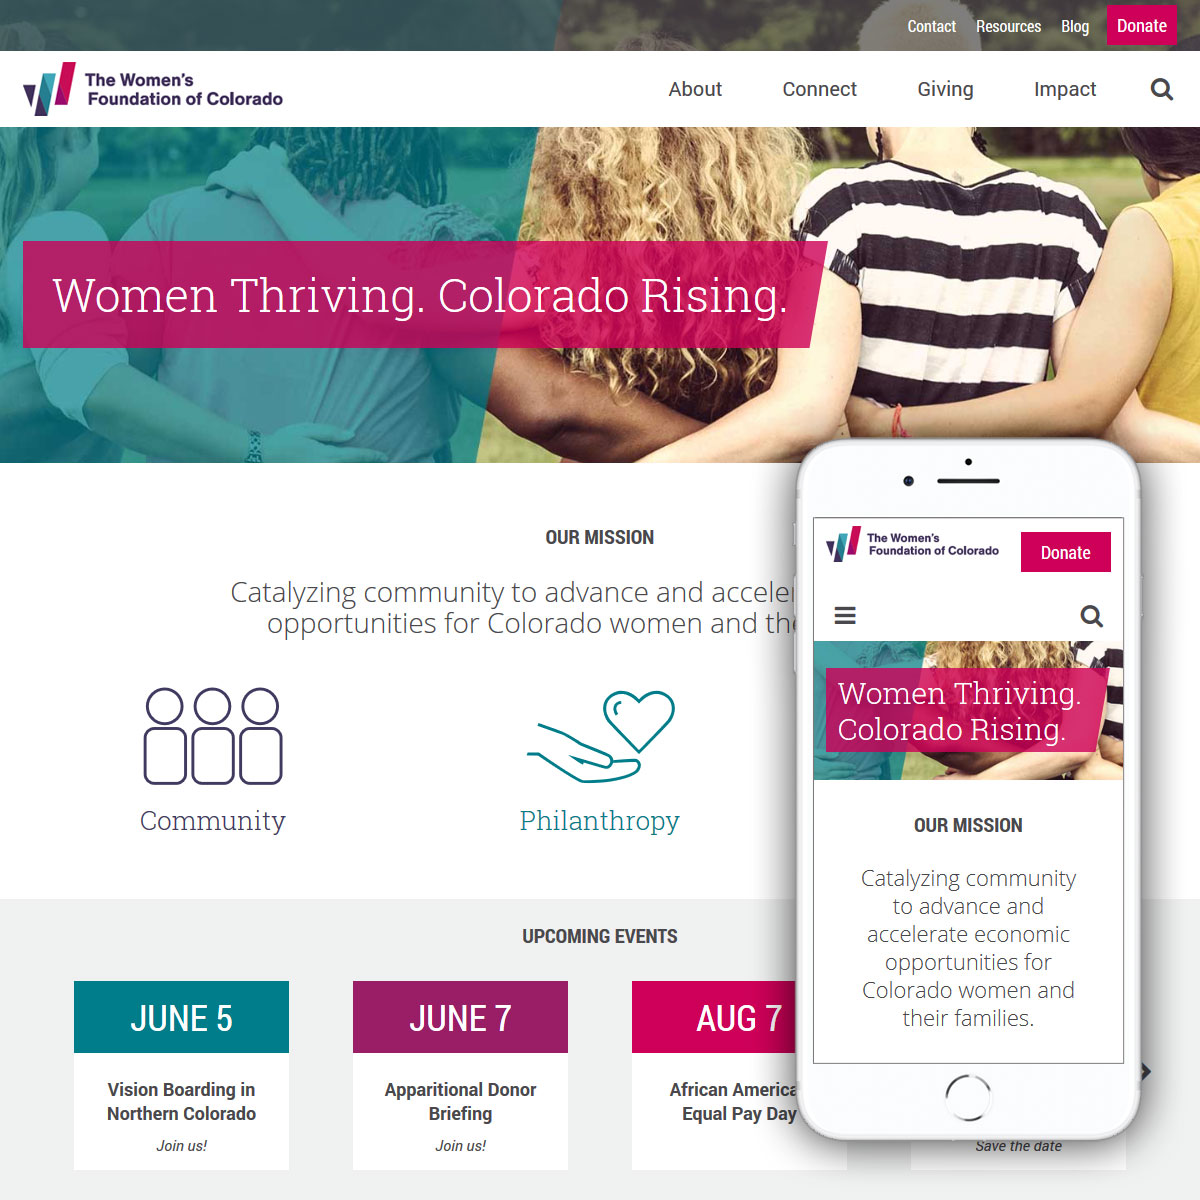 Women's Foundation of Colorado